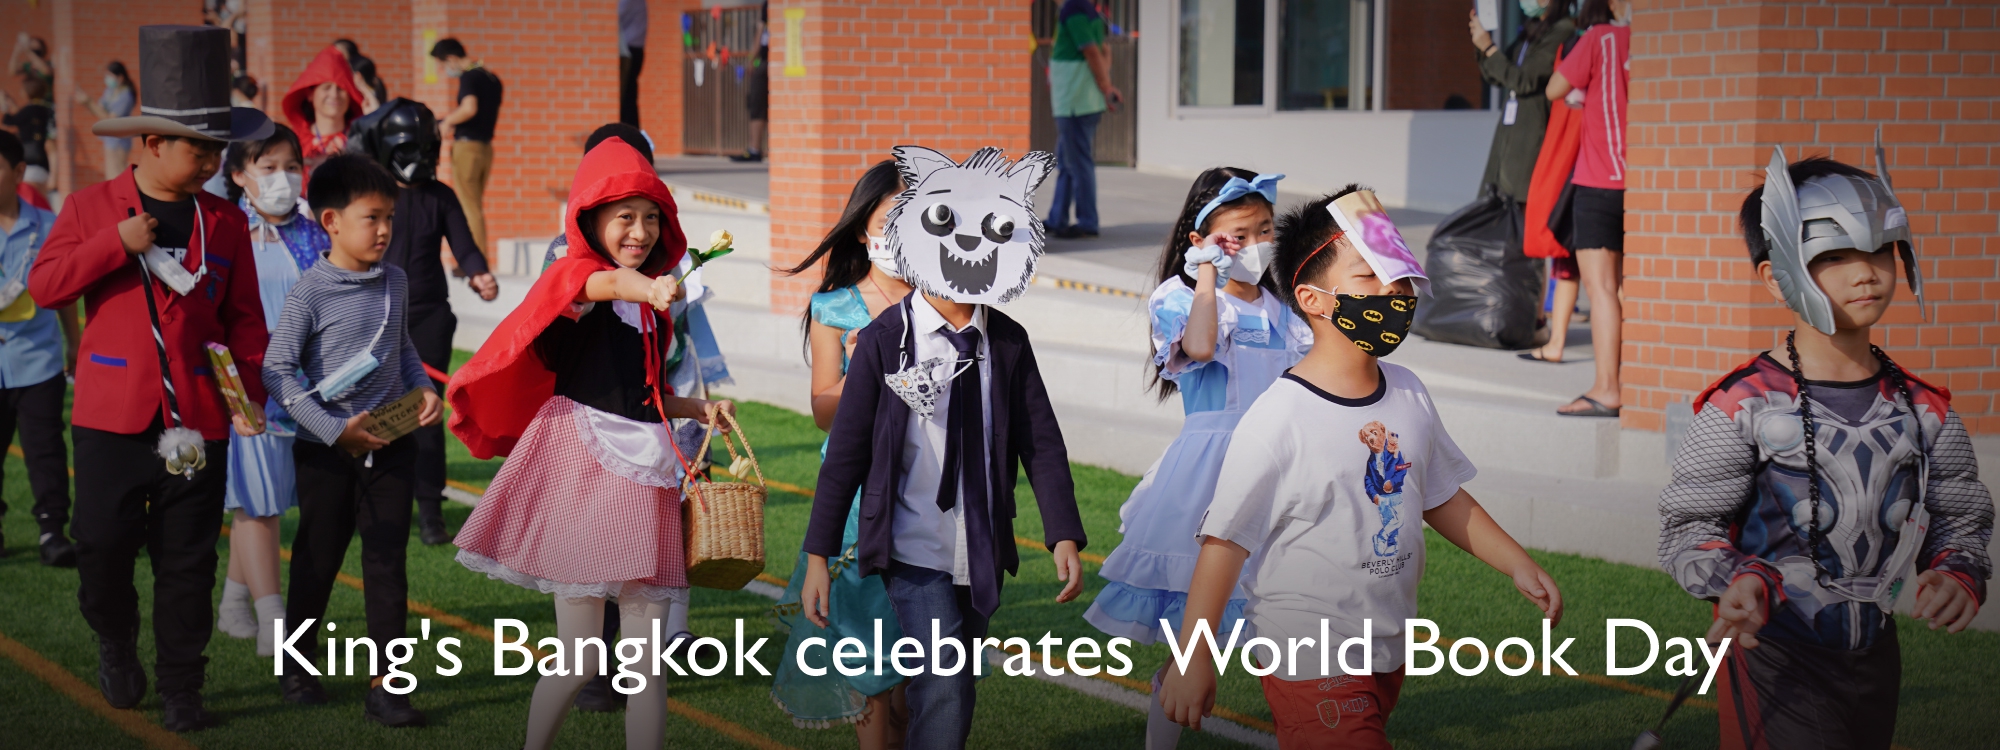 King’s Bangkok celebrates World Book Day.